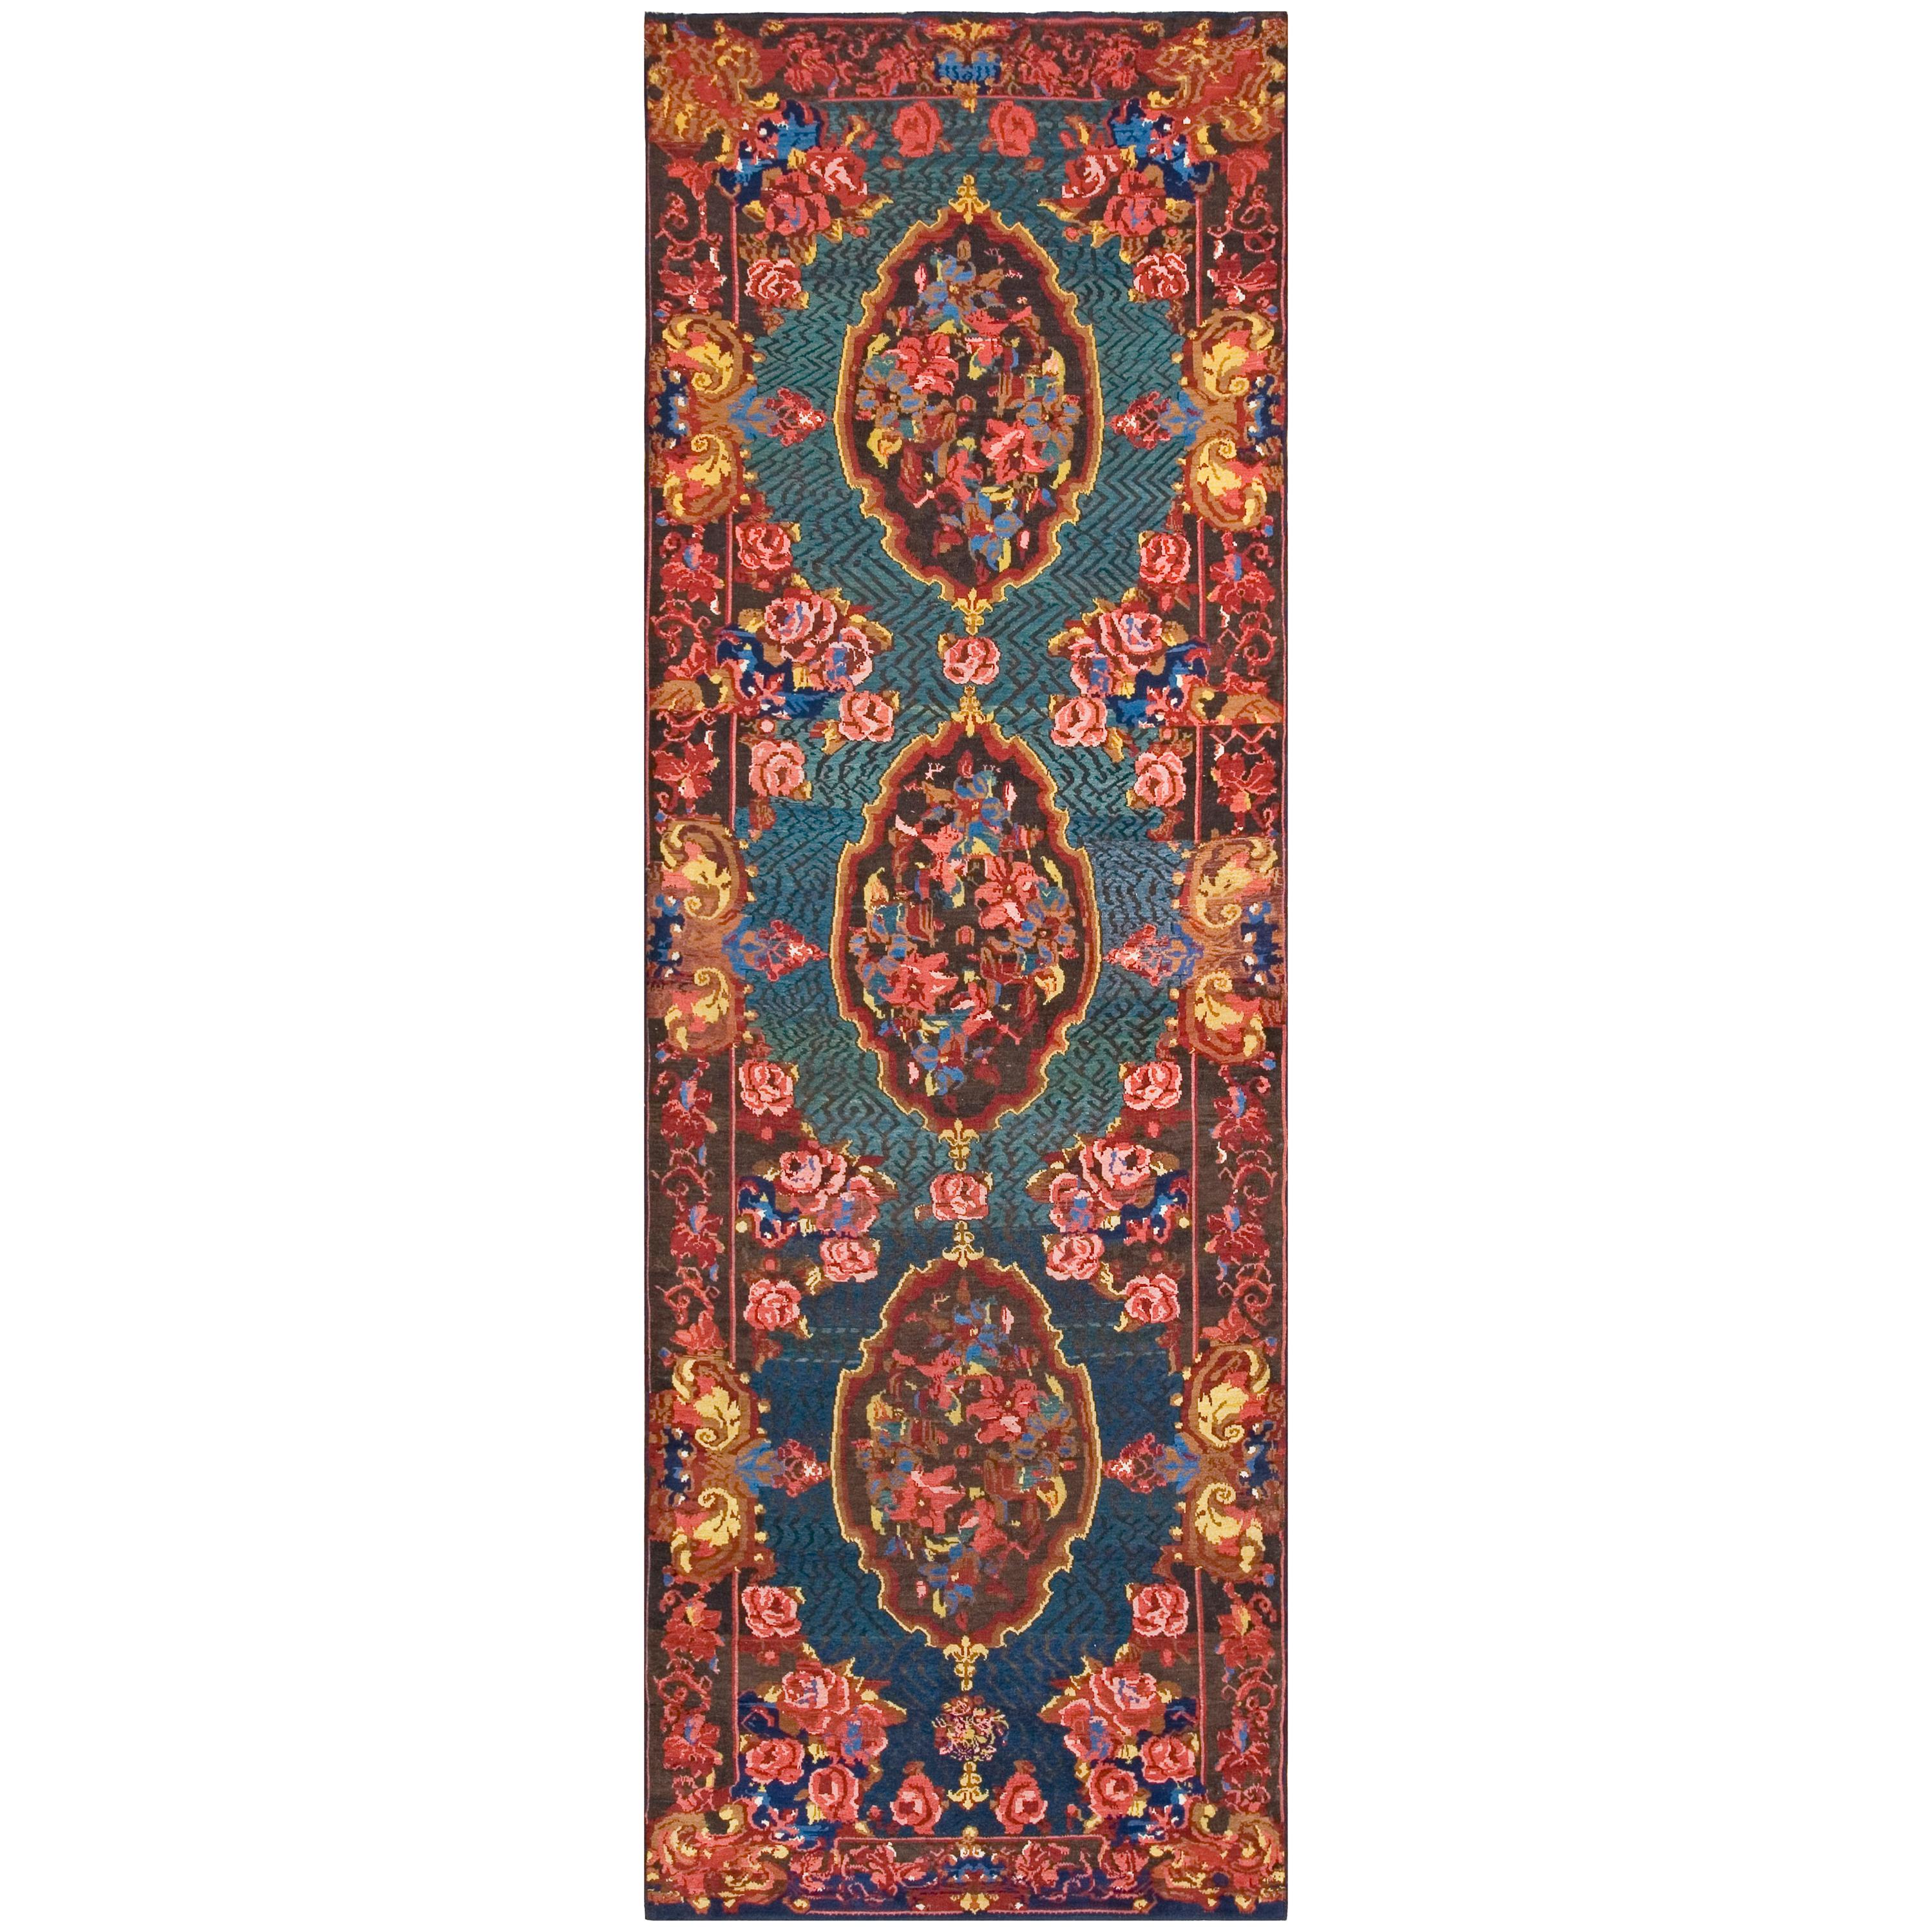 19th Century Caucasian Zeychor Carpet  ( 4'6" x 13'10" - 137 x 422 ) For Sale